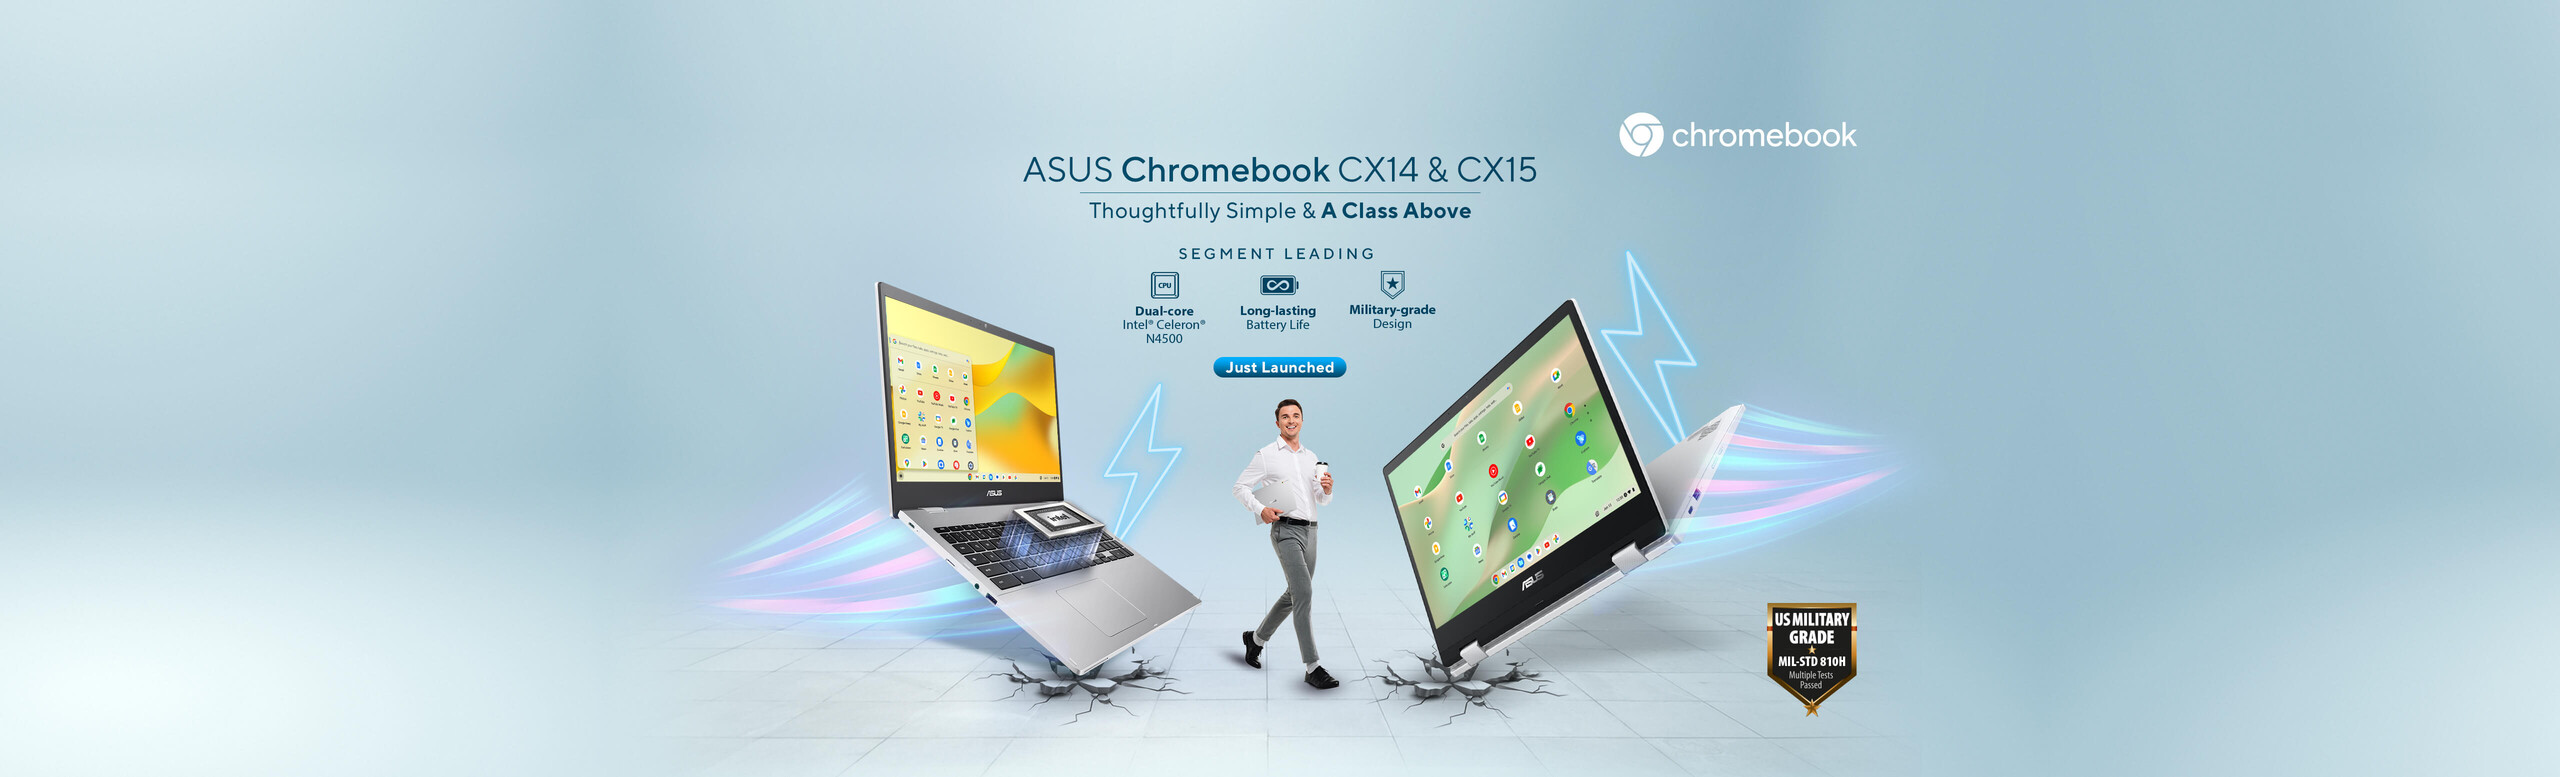 ASUS Chromebook CX14 & CX15